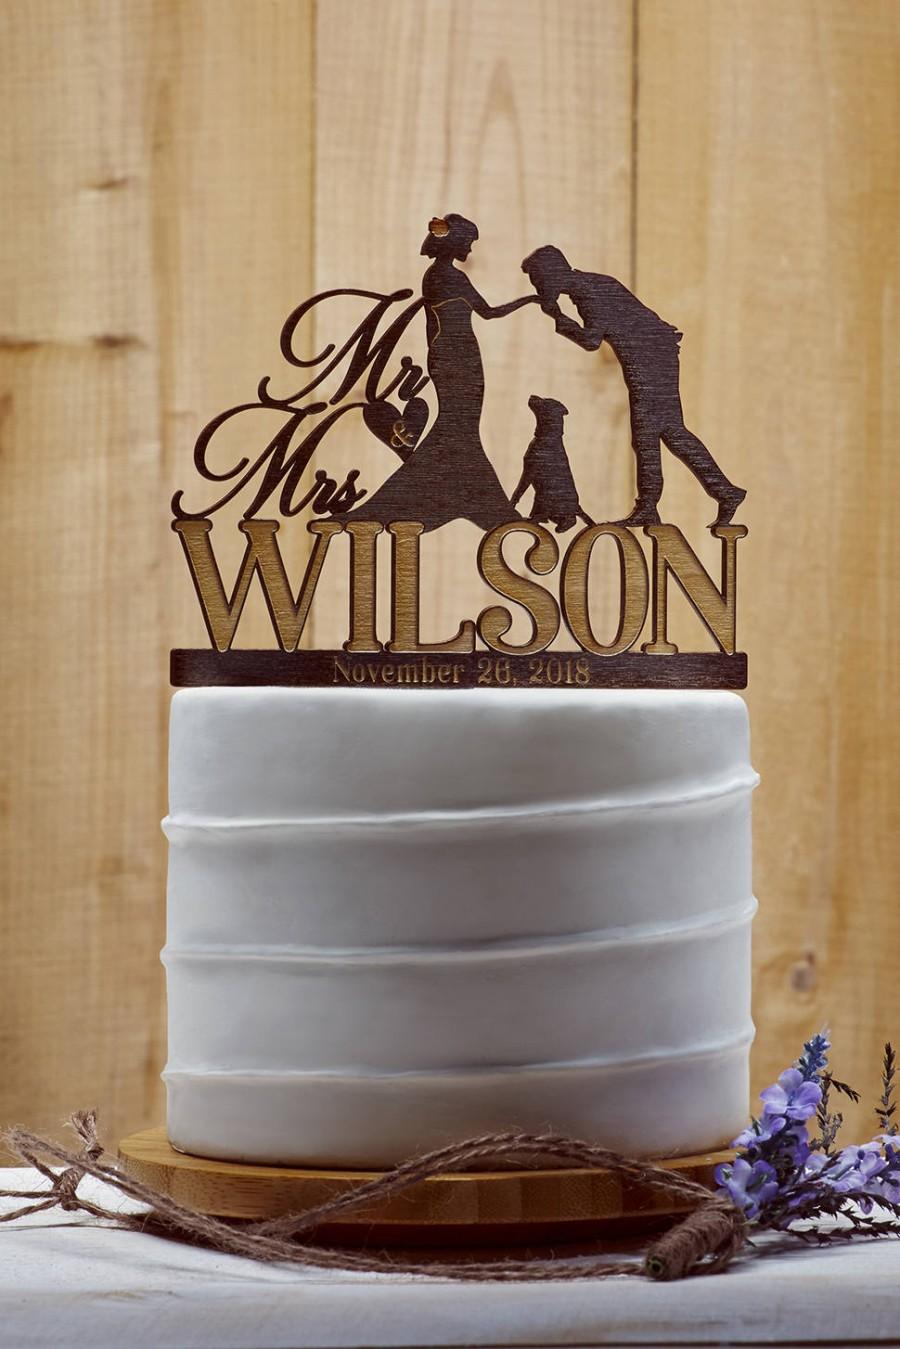 زفاف - Customized Wedding Cake Topper With Dog, Personalized Cake Topper for Wedding, Custom Personalized Wedding Cake Topper, Couple Cake Topper